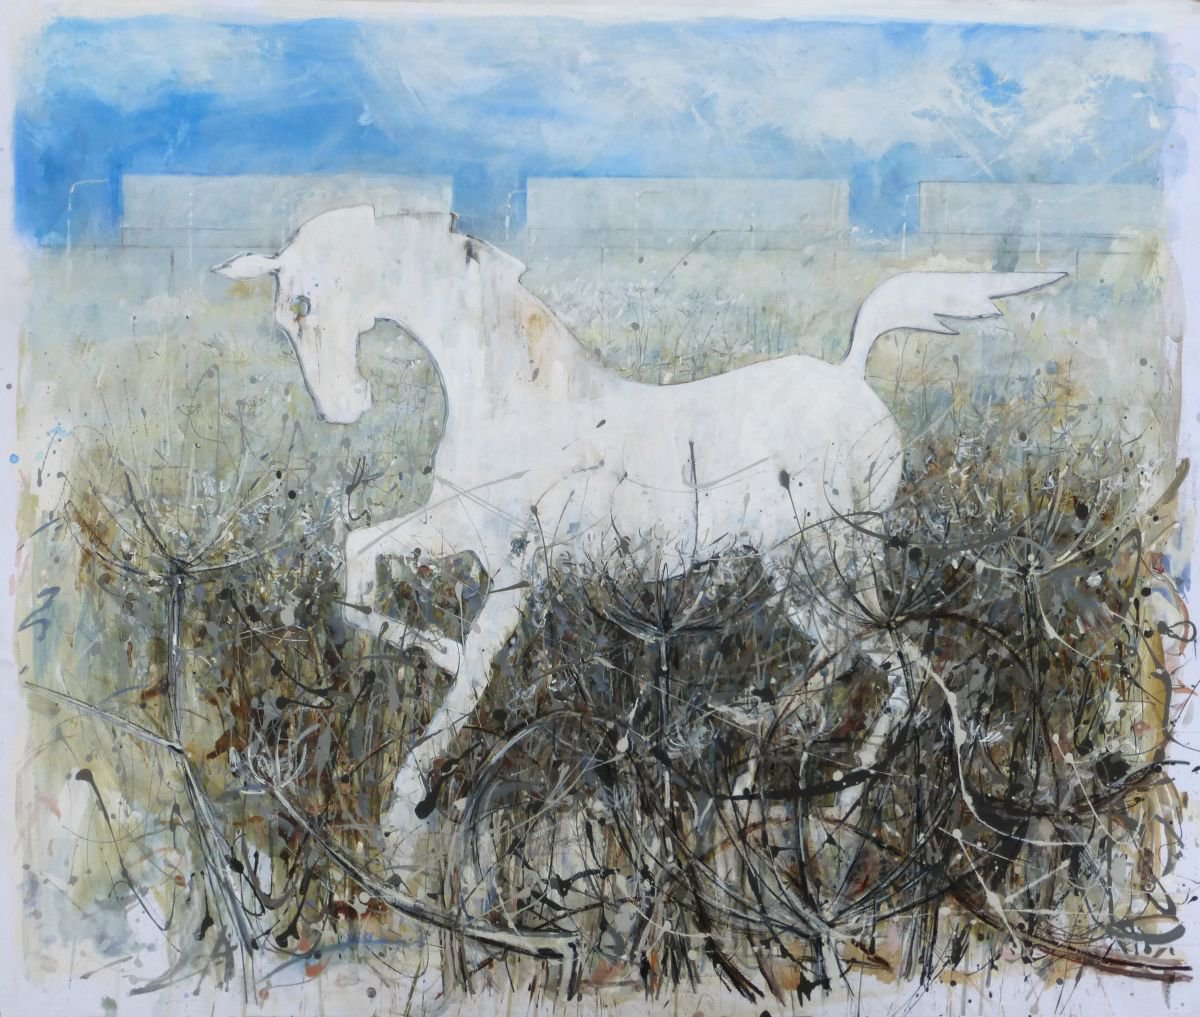 England - white horse of the edge land 1 by John Sharp